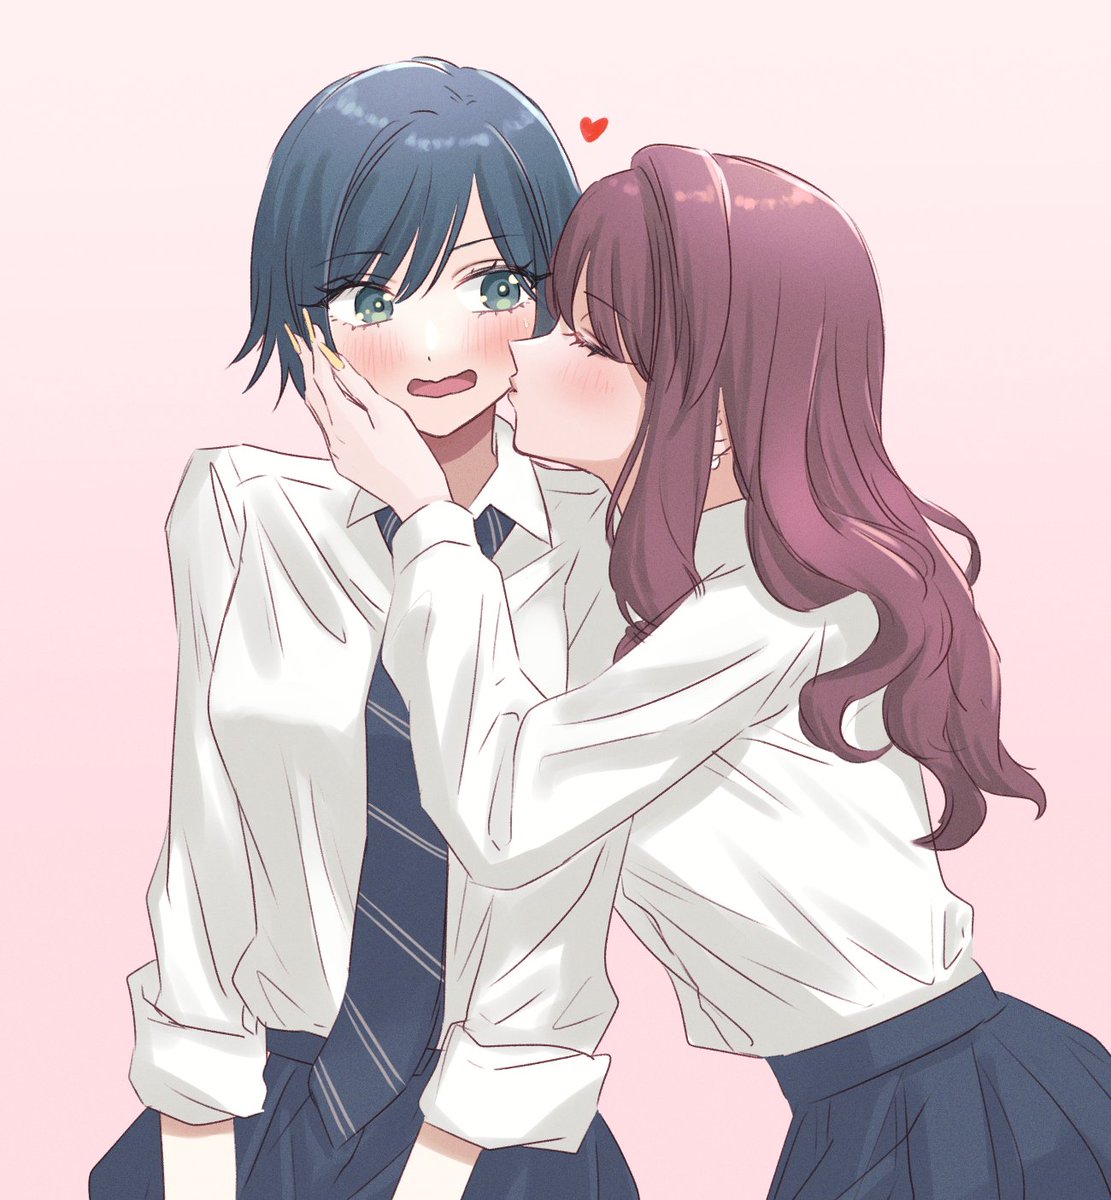 multiple girls 2girls yuri necktie school uniform kiss blush  illustration images